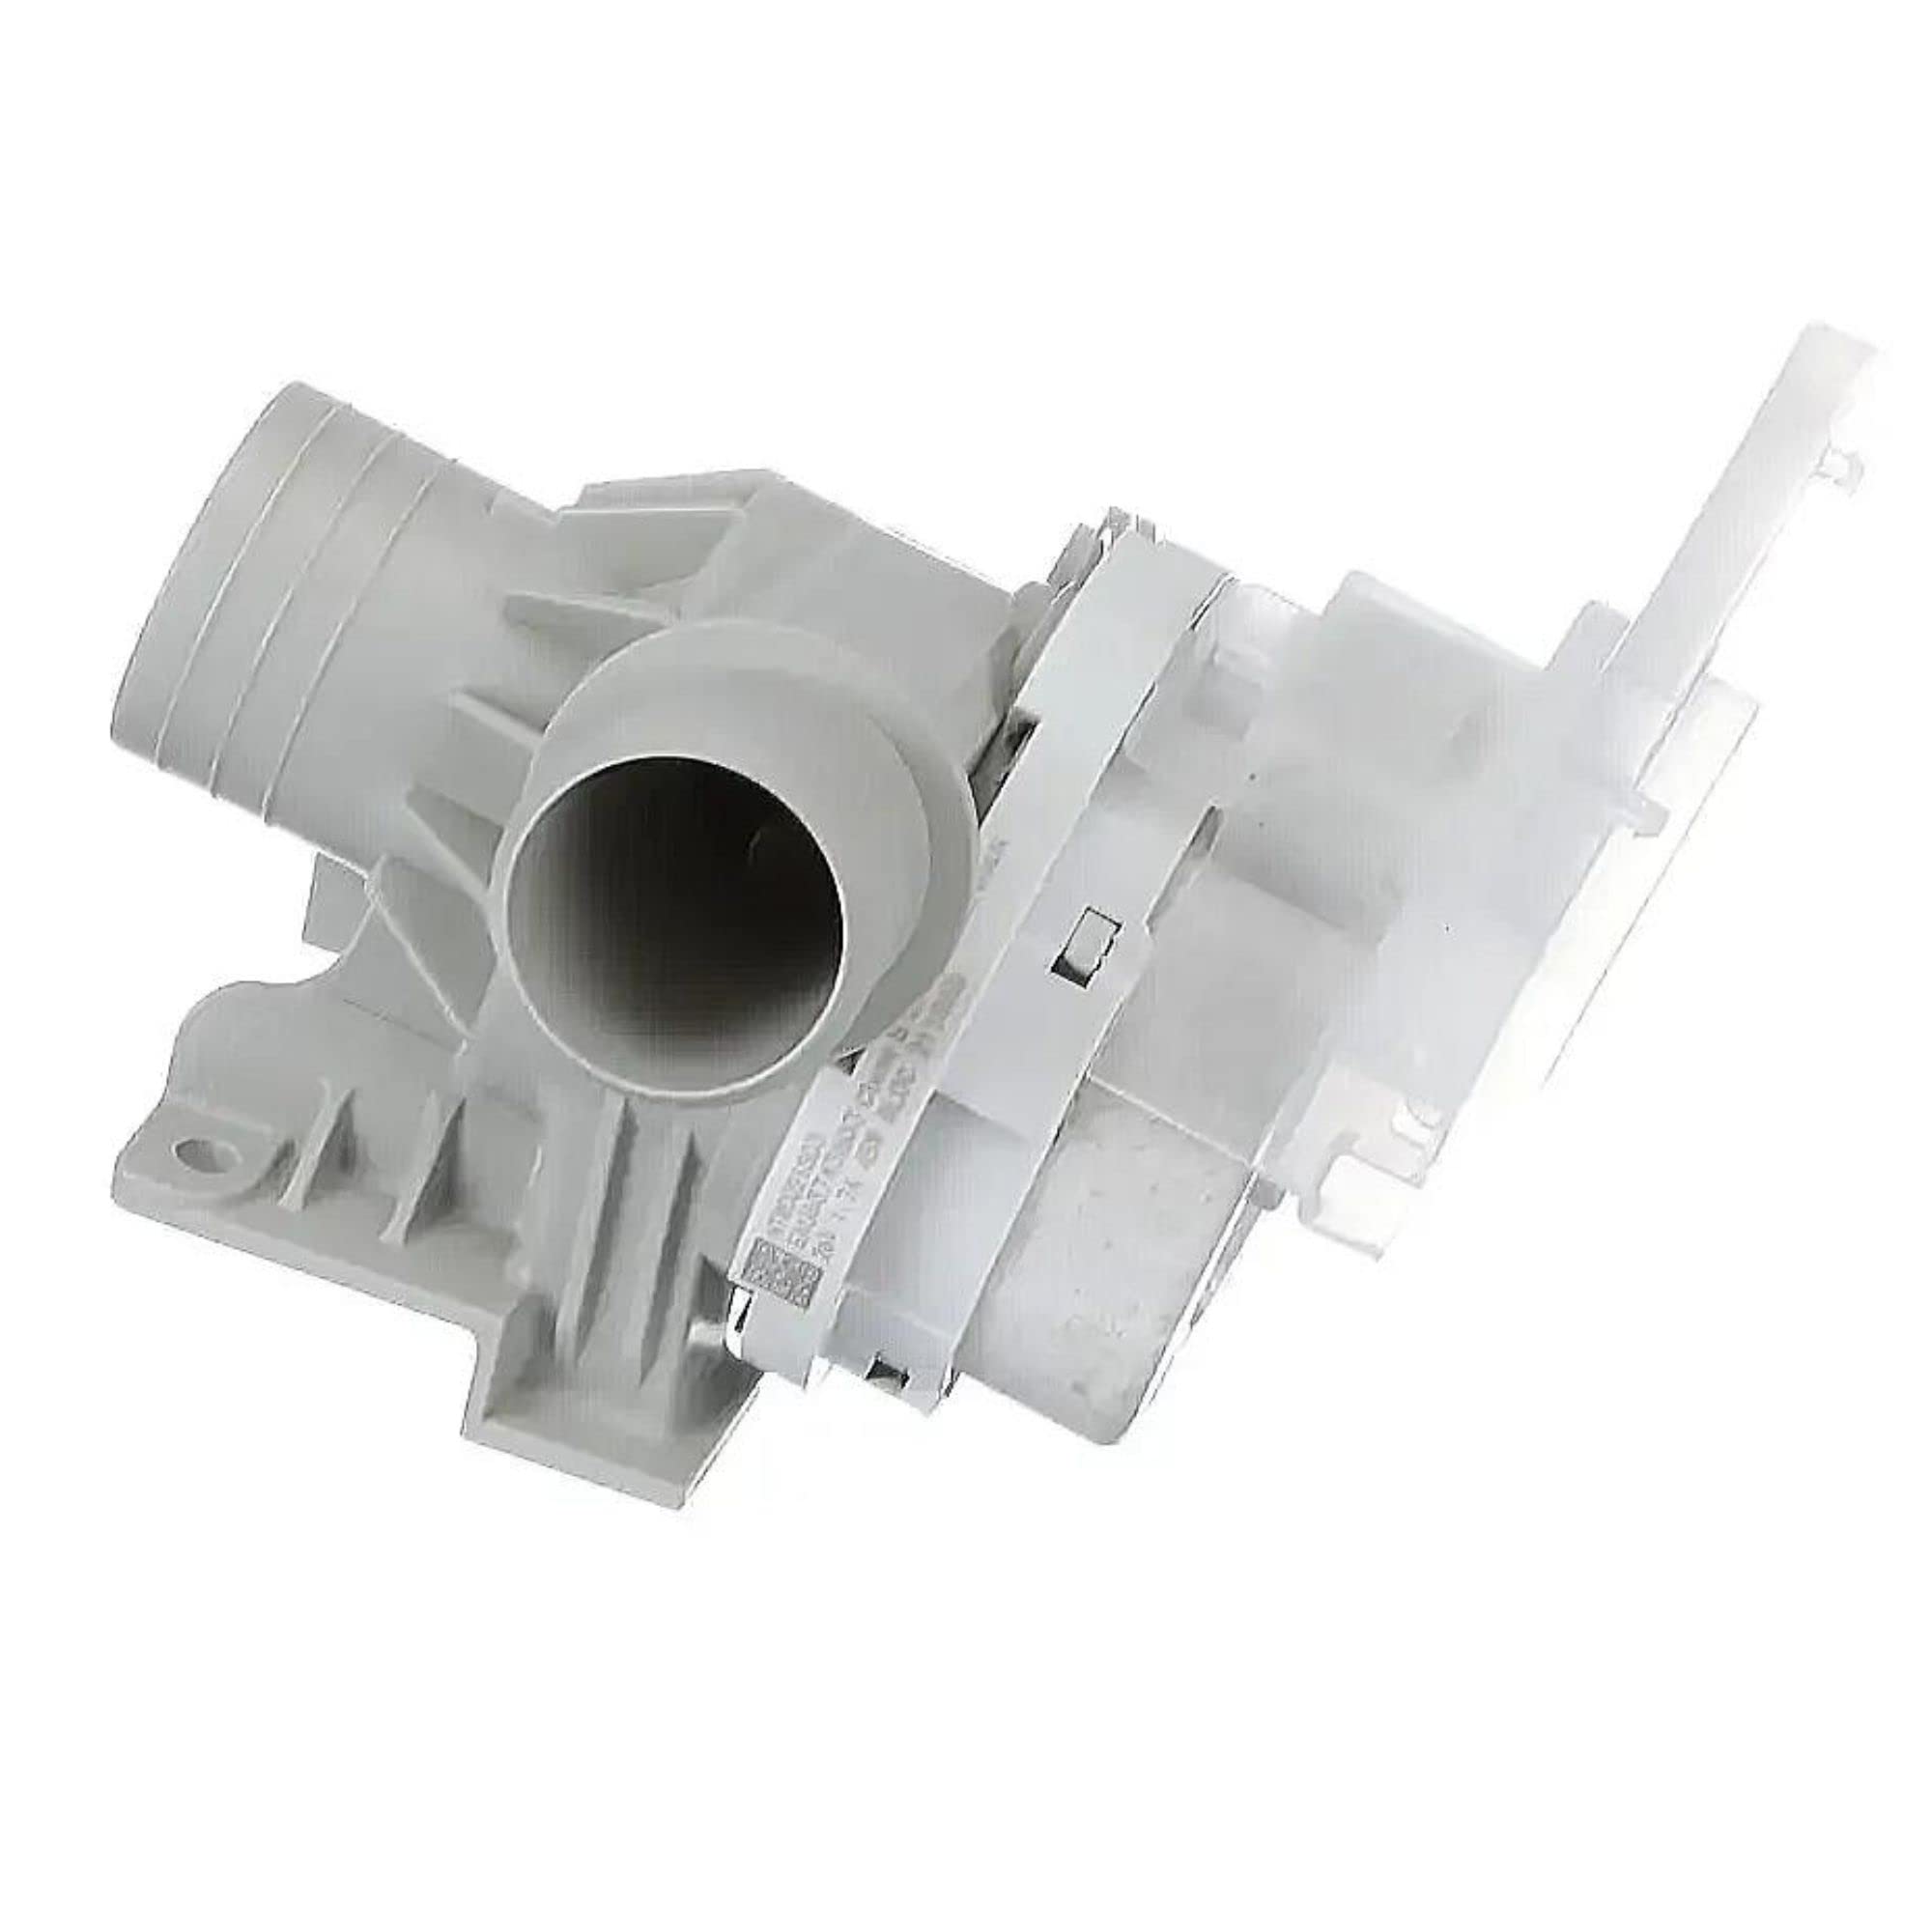 LG AHA75673404 Washer Drain Pump Assembly